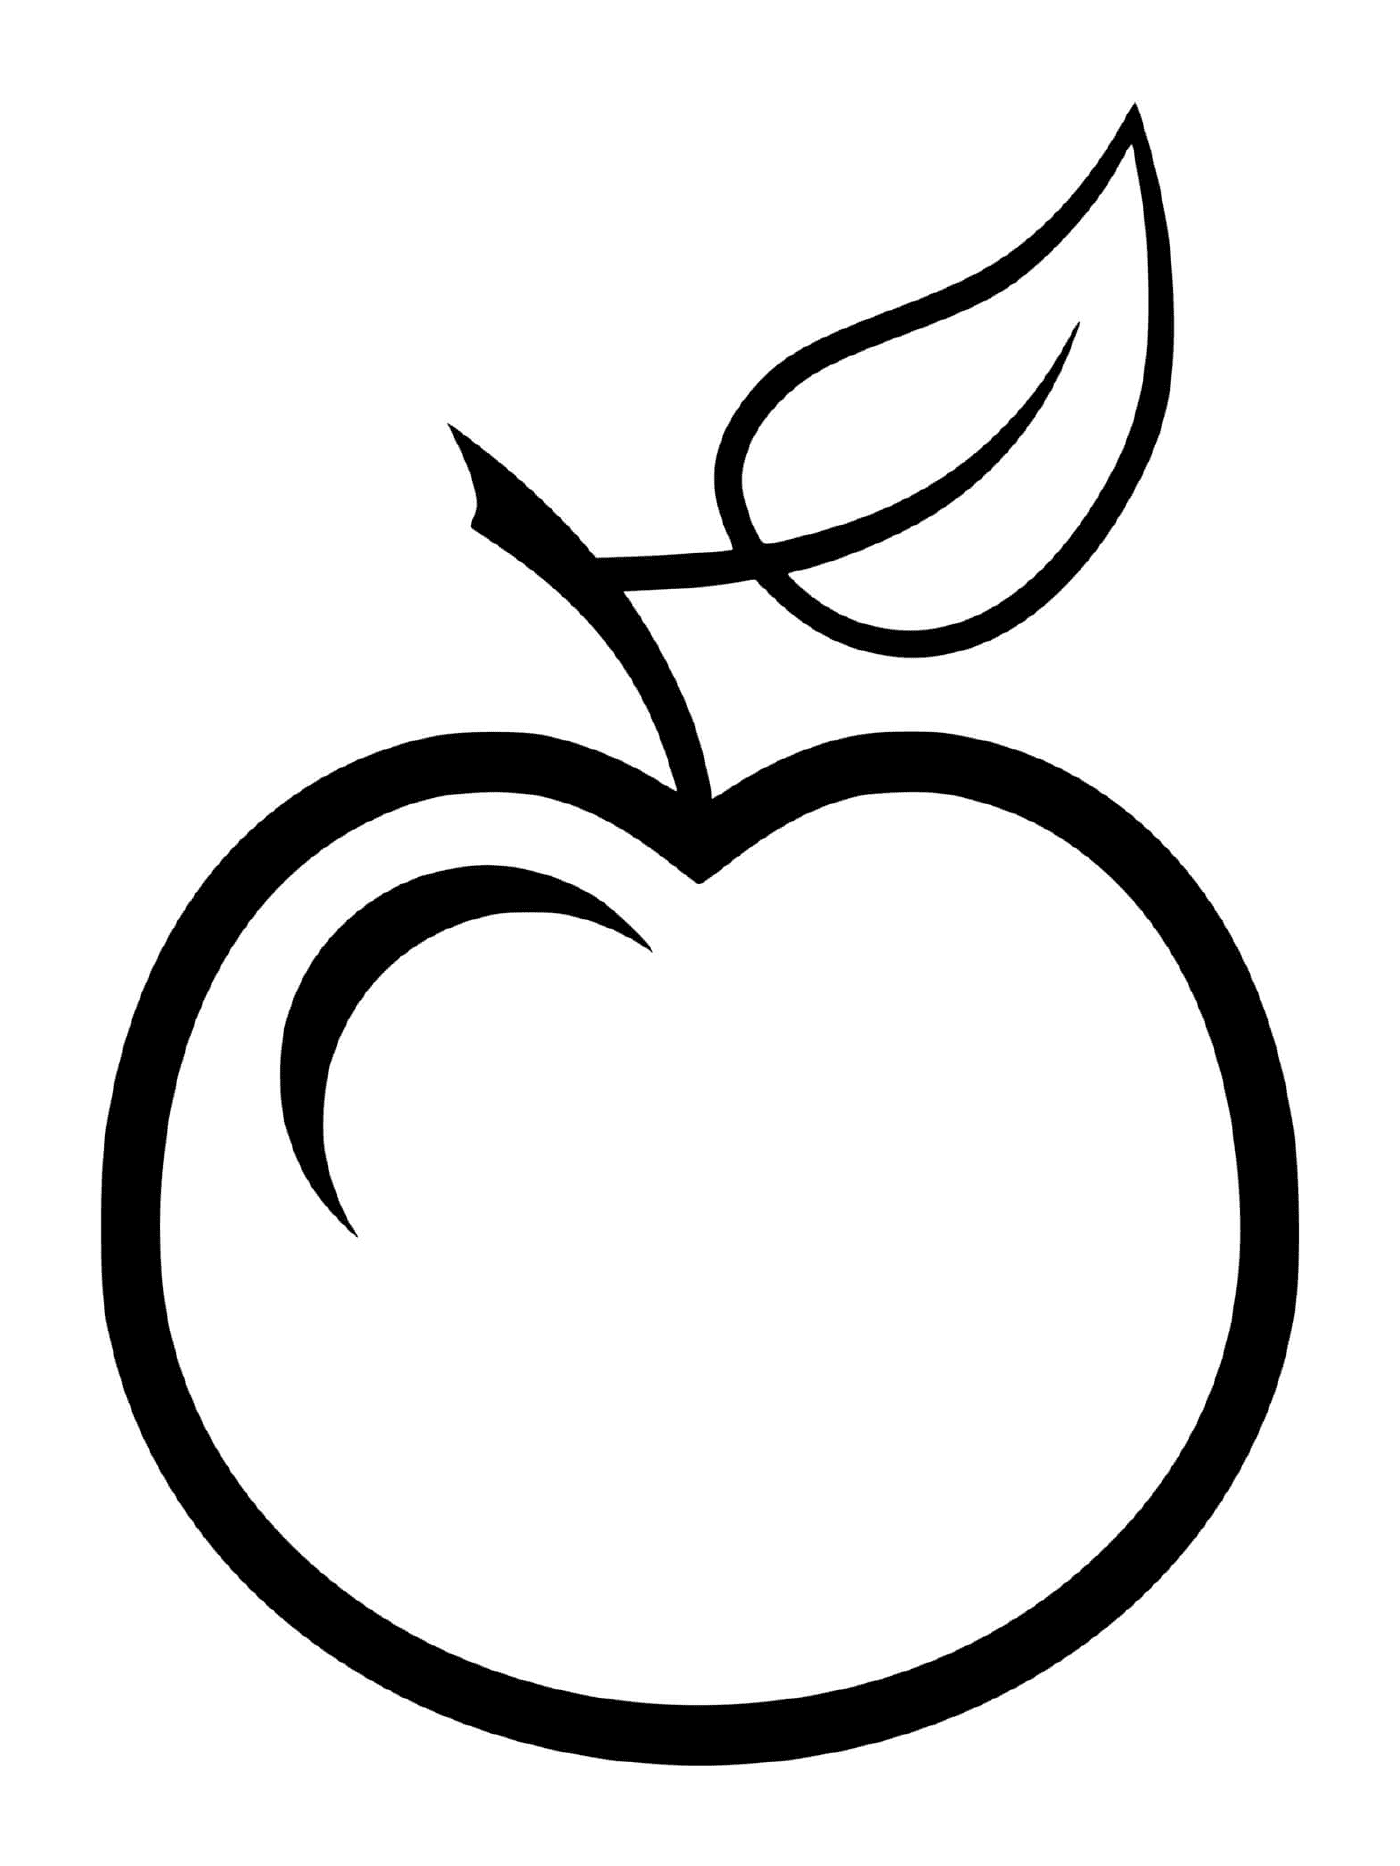  Frutas : manzana dorada 